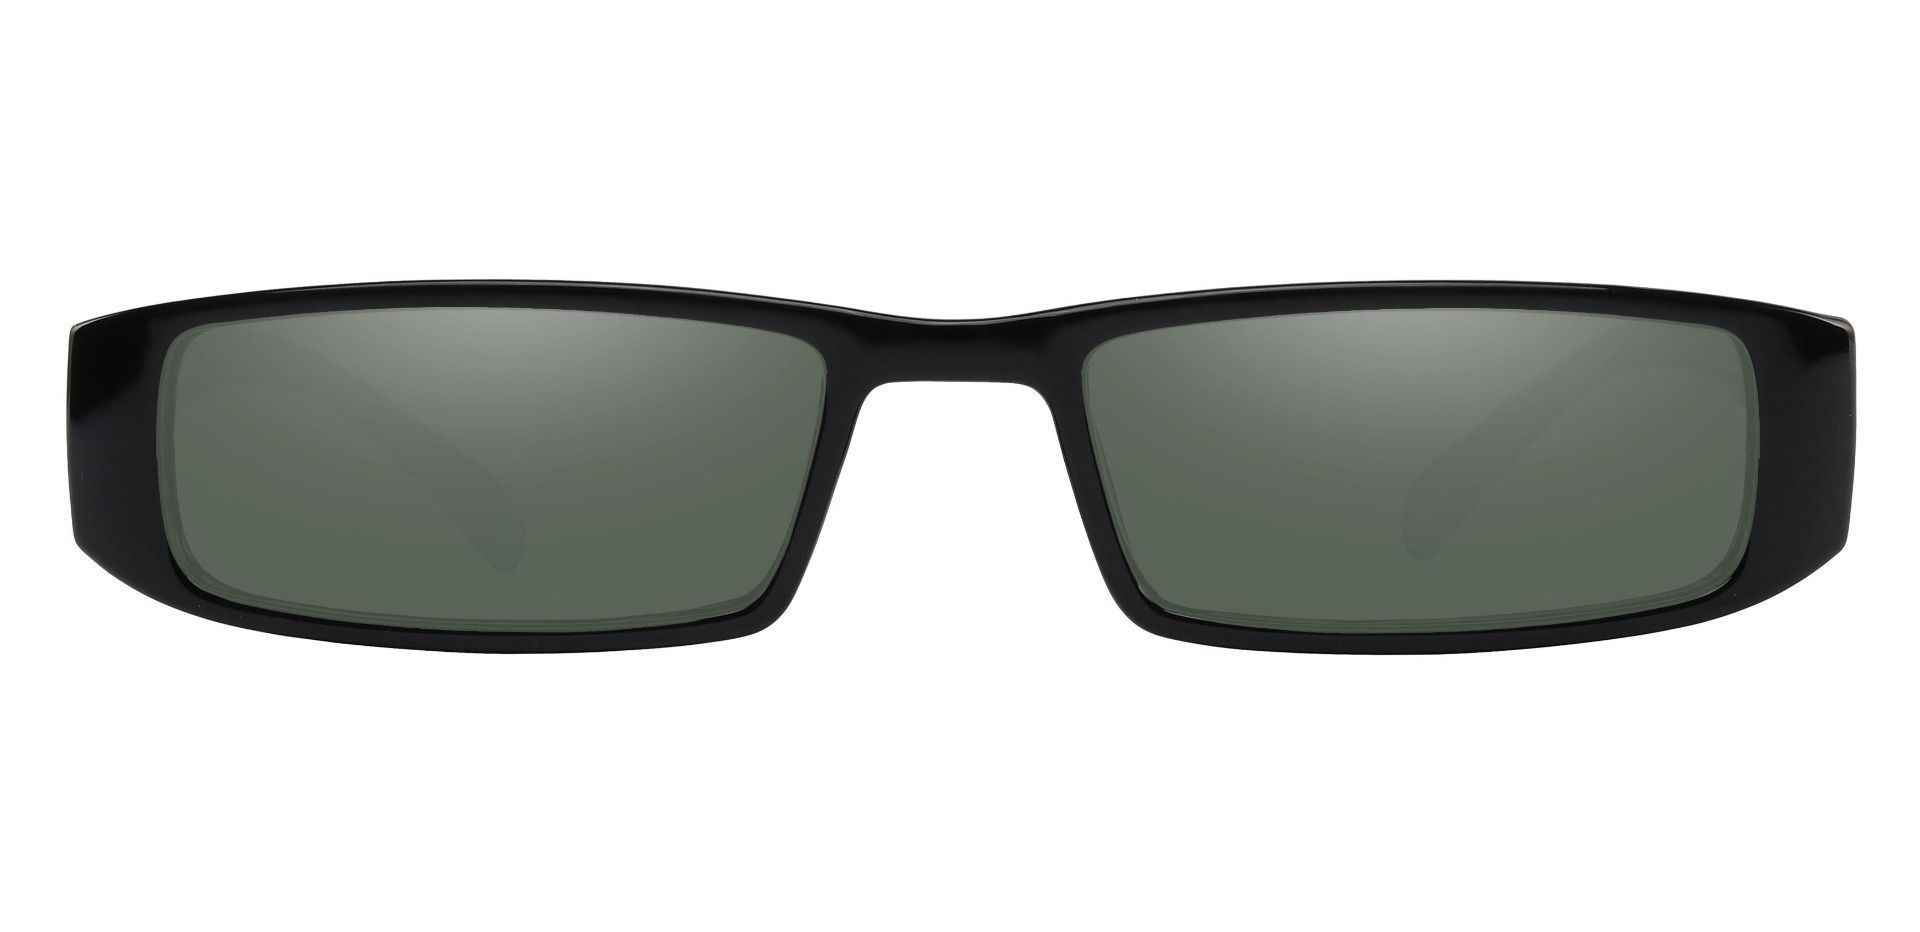 Buccaneer Rectangle Reading Sunglasses - Black Frame With Green Lenses